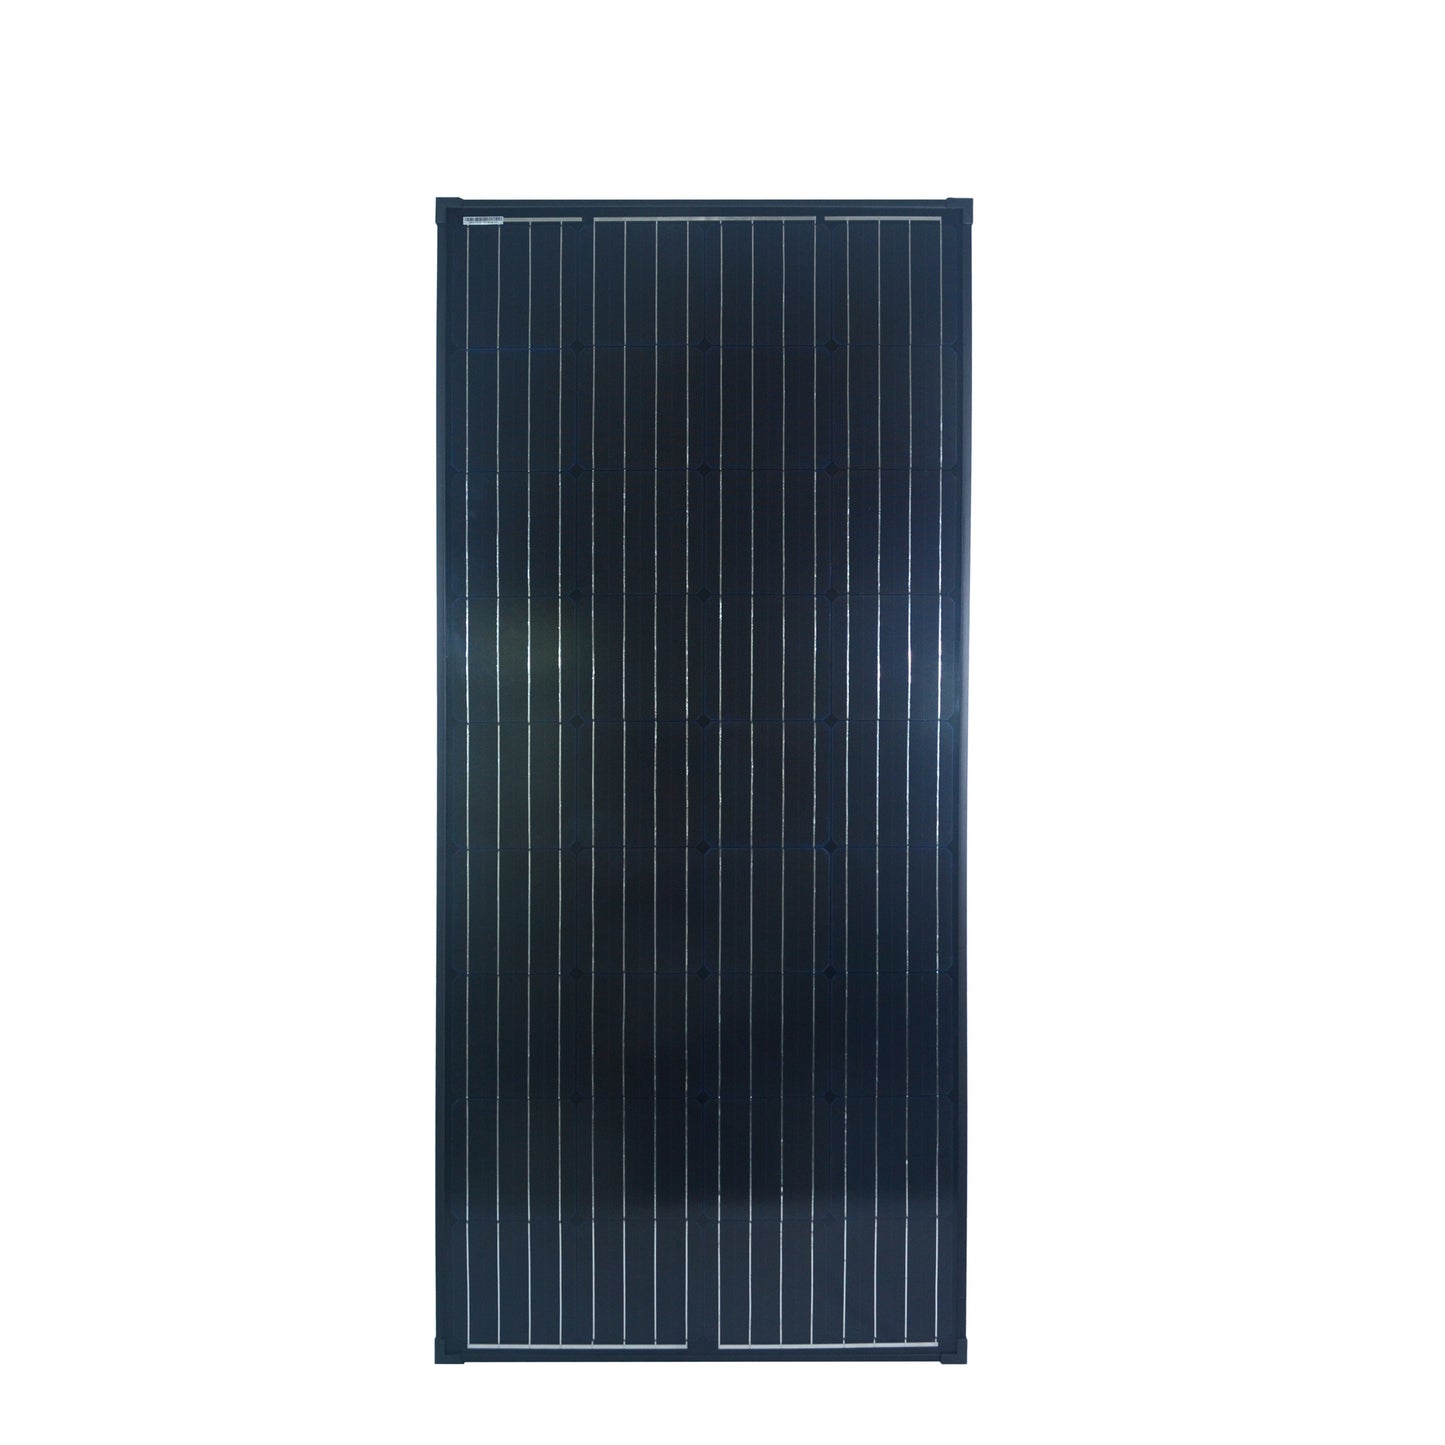 165 Watt Crystalline Solar Panel for 12-Volt Charging (Refurbished)